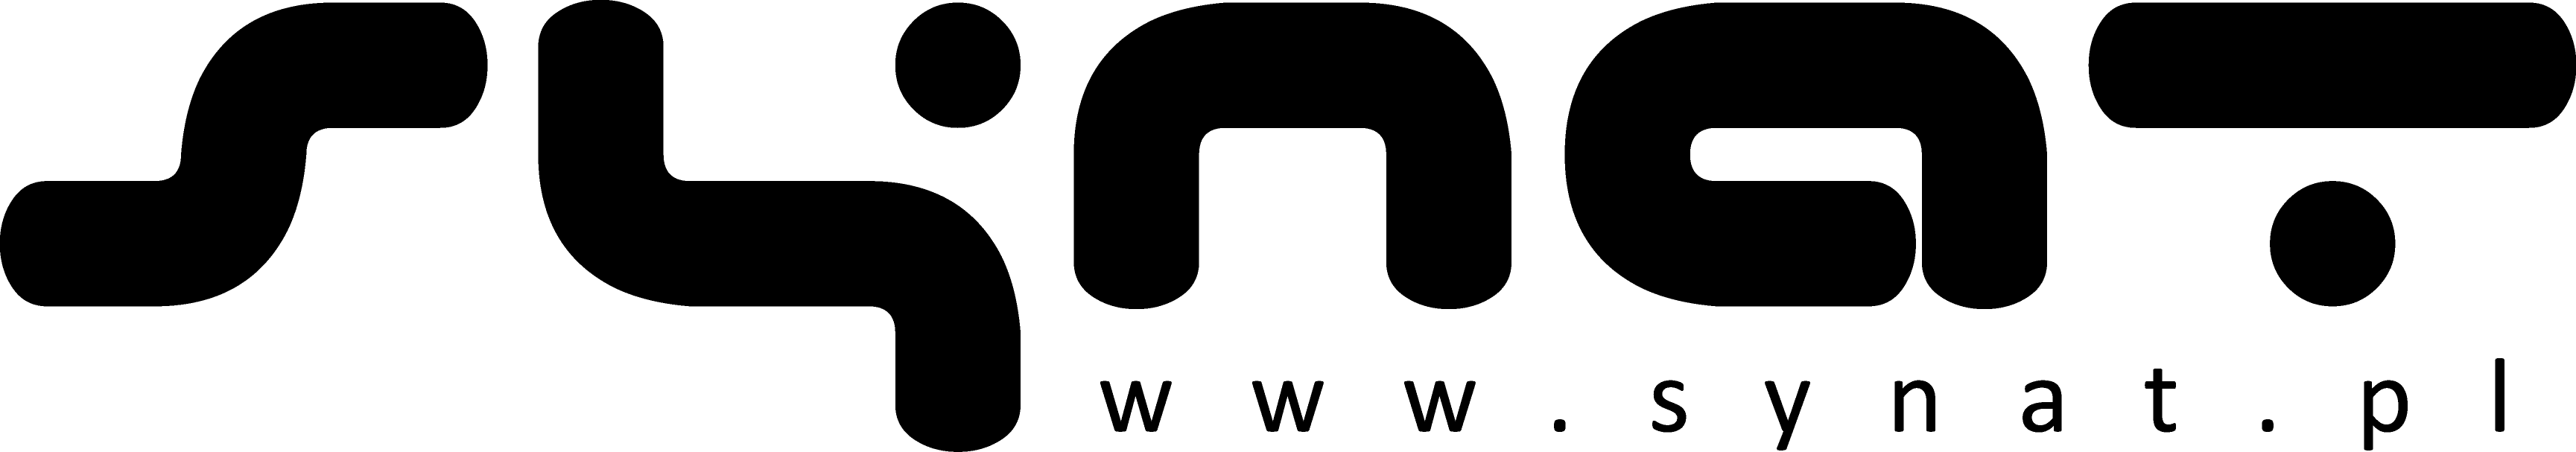 logo projektu synat